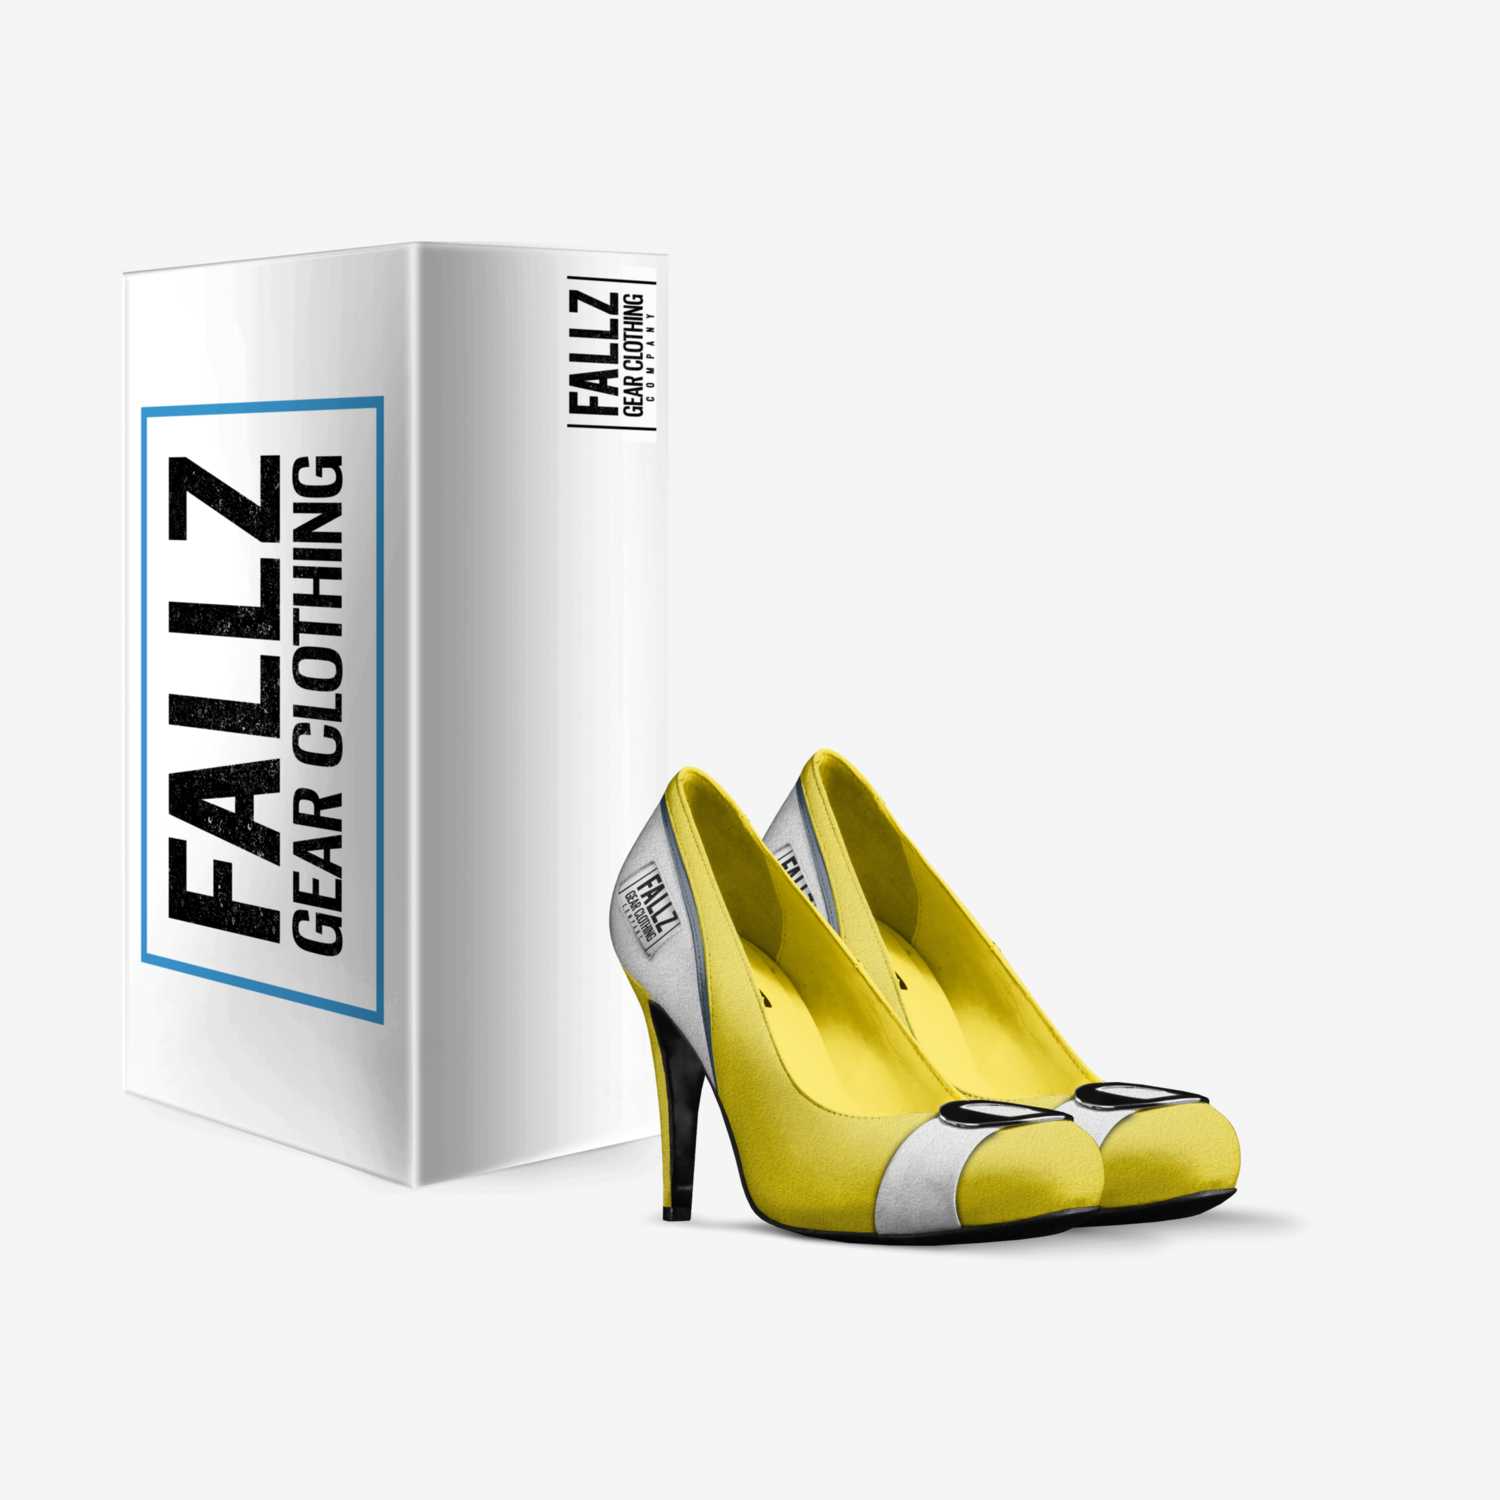 Fallz Gear: Fire custom made in Italy shoes by Fallz Gear | Box view